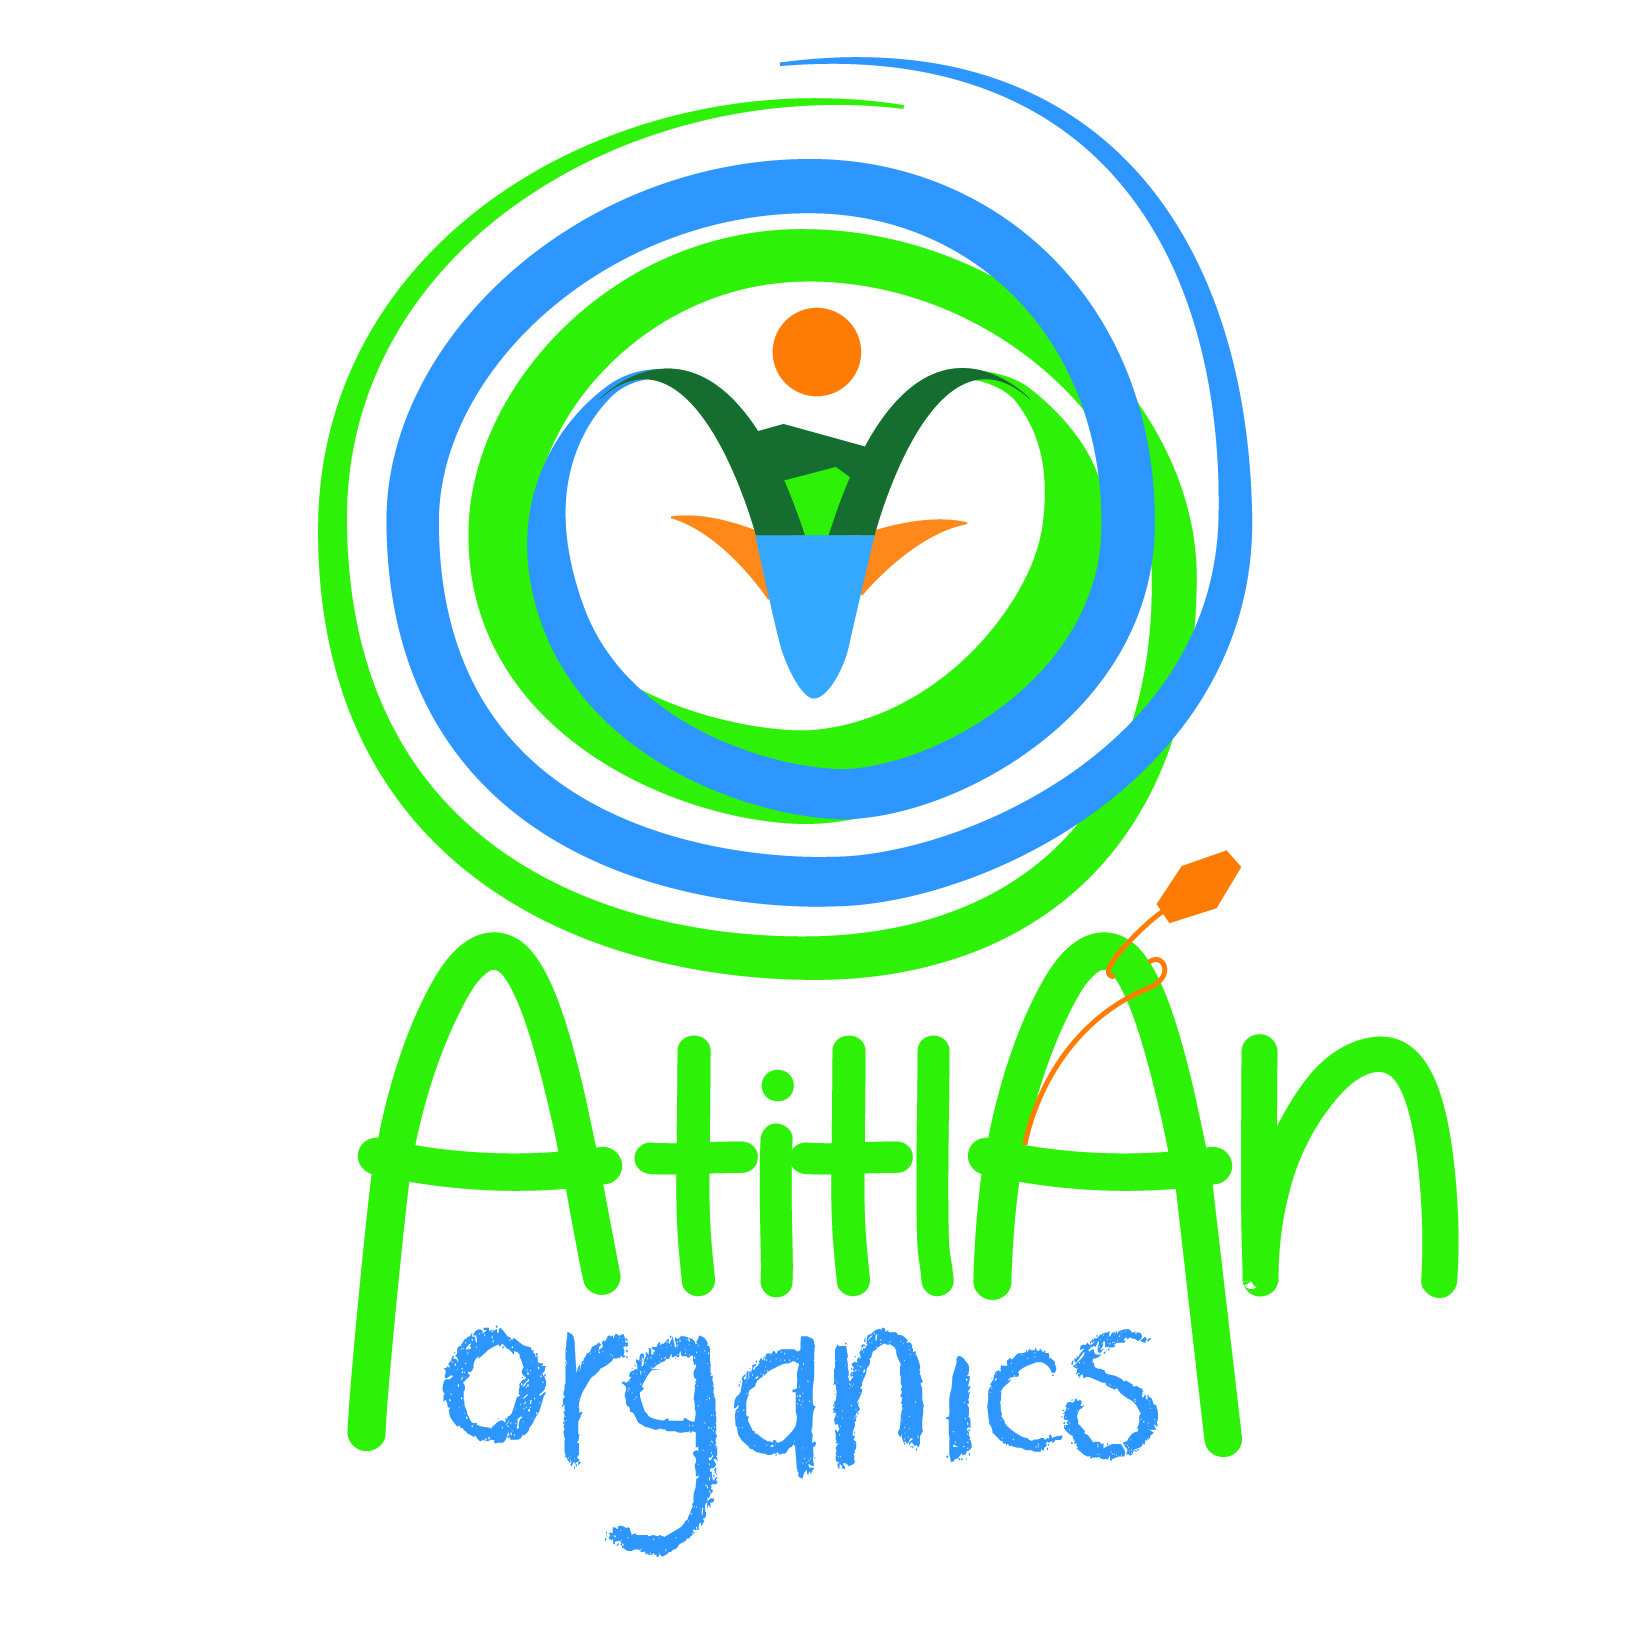 atitlan_organics_logo-02.jpg